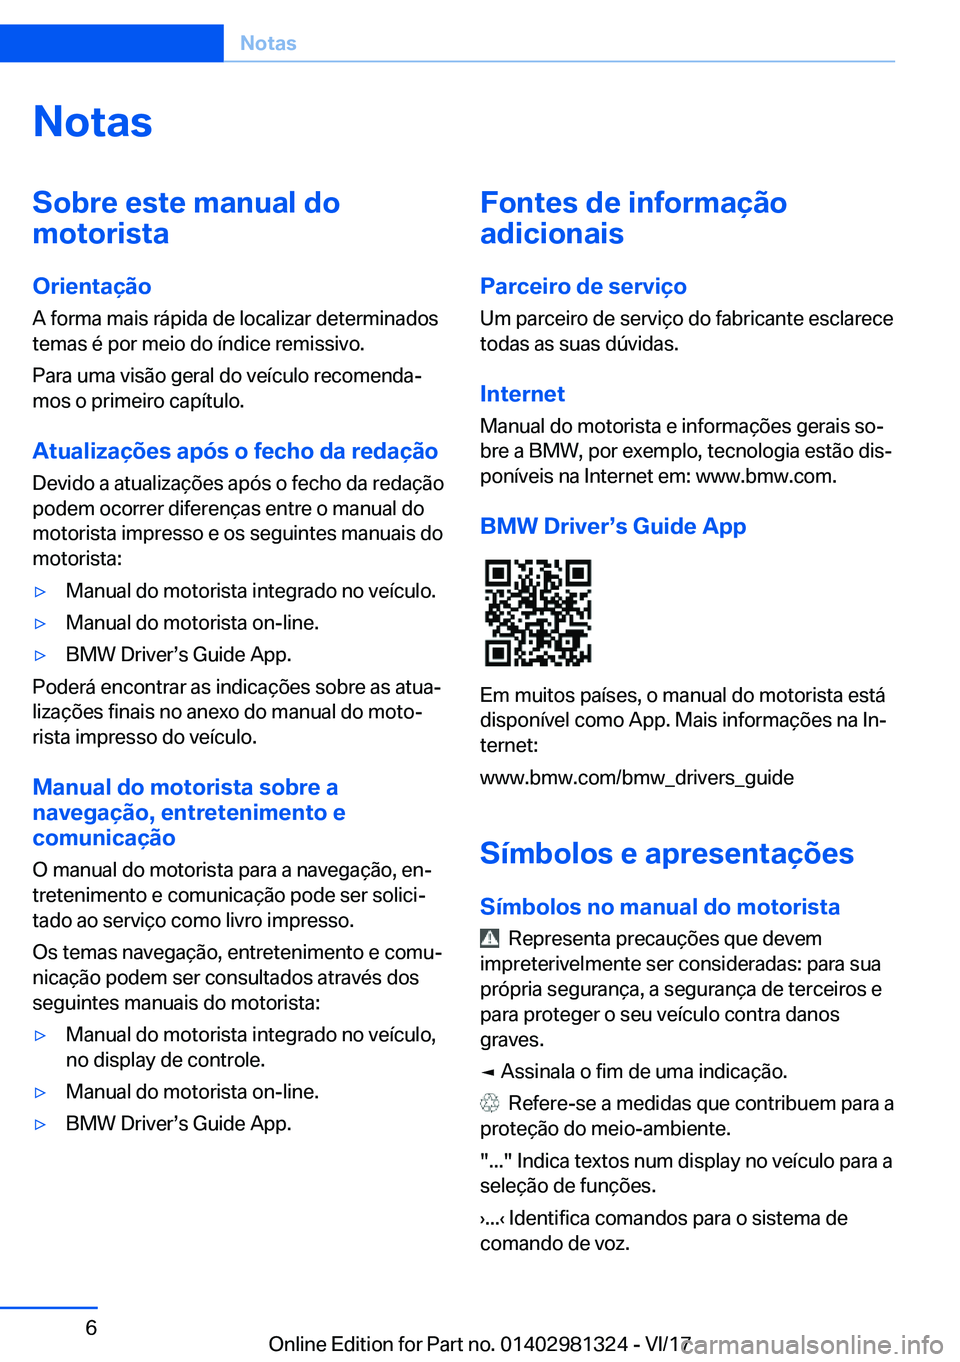 BMW X4 2018  Manual do condutor (in Portuguese) �N�o�t�a�s�S�o�b�r�e��e�s�t�e��m�a�n�u�a�l��d�o
�m�o�t�o�r�i�s�t�a
�O�r�i�e�n�t�a�